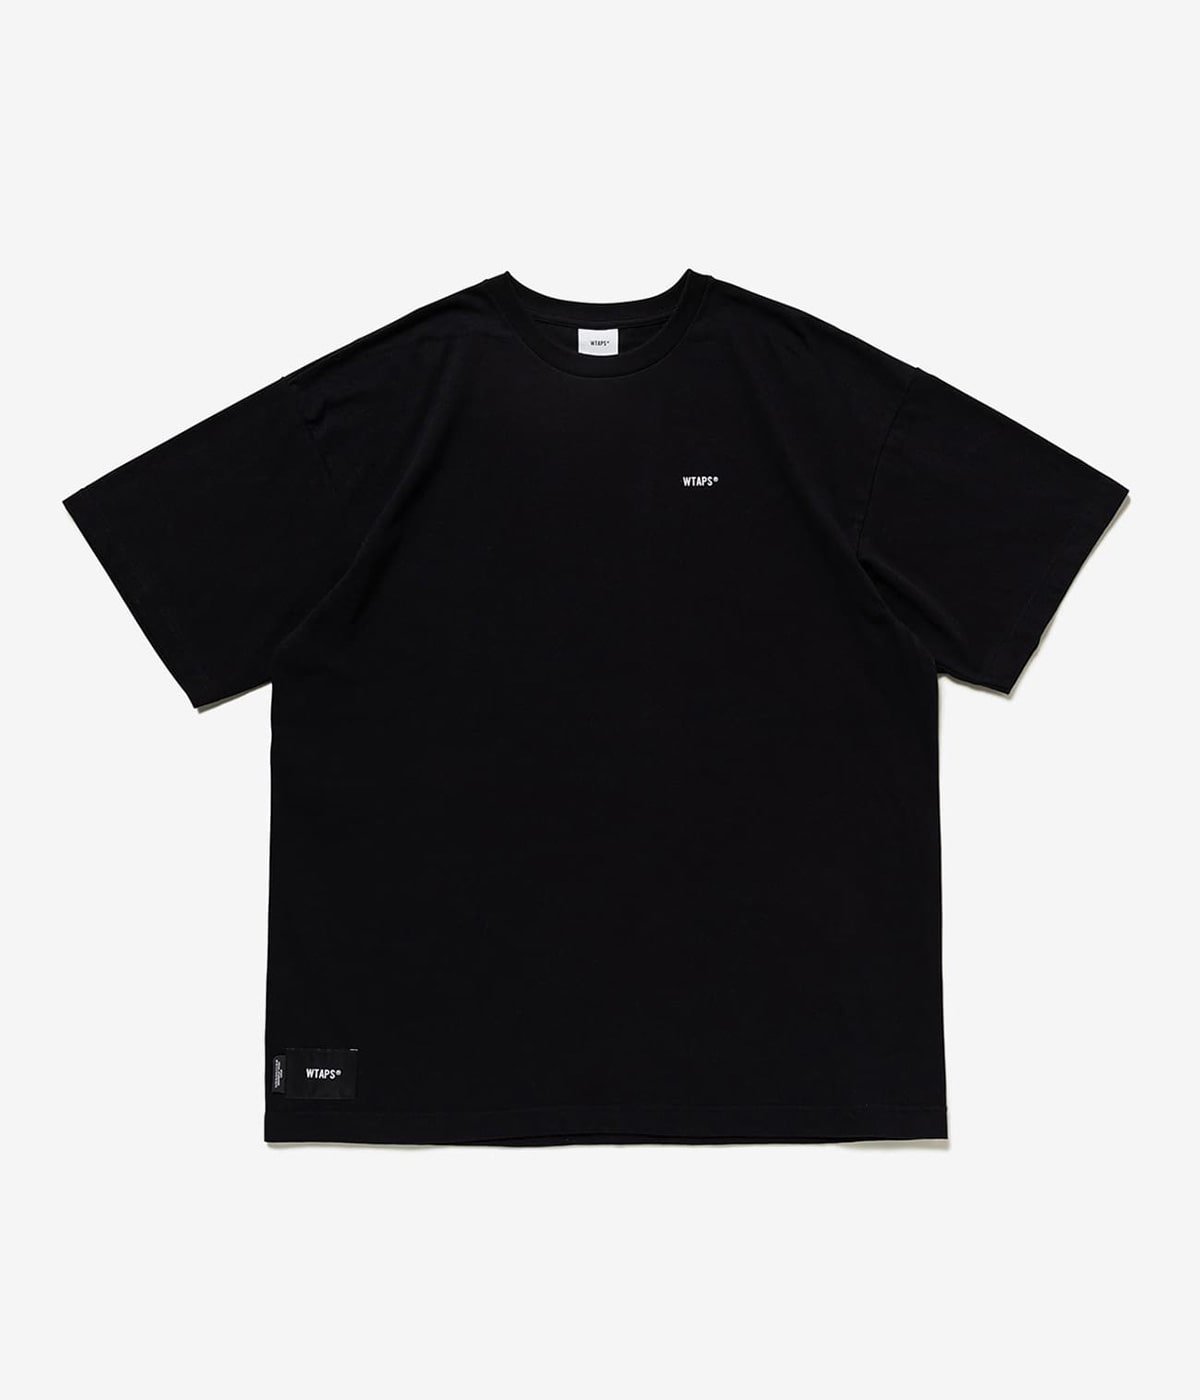 LargeカラーWTAPS L 新品 LLW / SS / COTTON BLACK LARGE - Tシャツ 